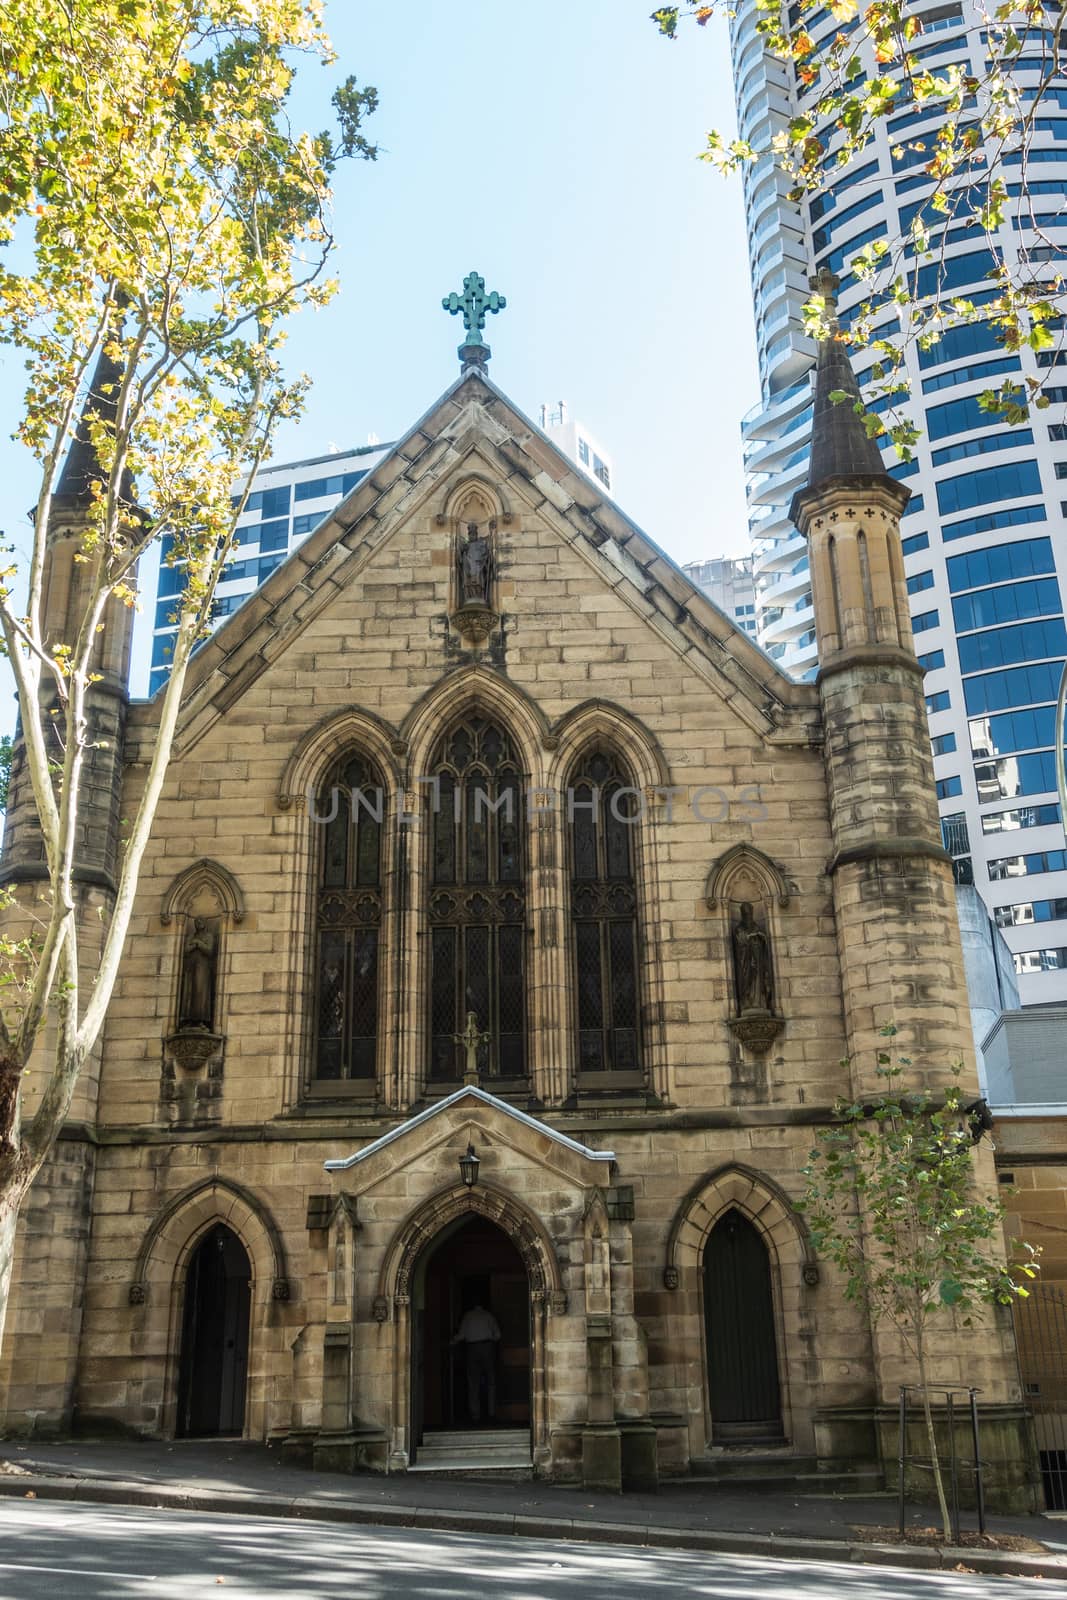 Sydney, Australia - February 12, 2019: Saint Patricks Church on Grosvenor Street opposite of Lang Park. Street view of front facade and entrances.